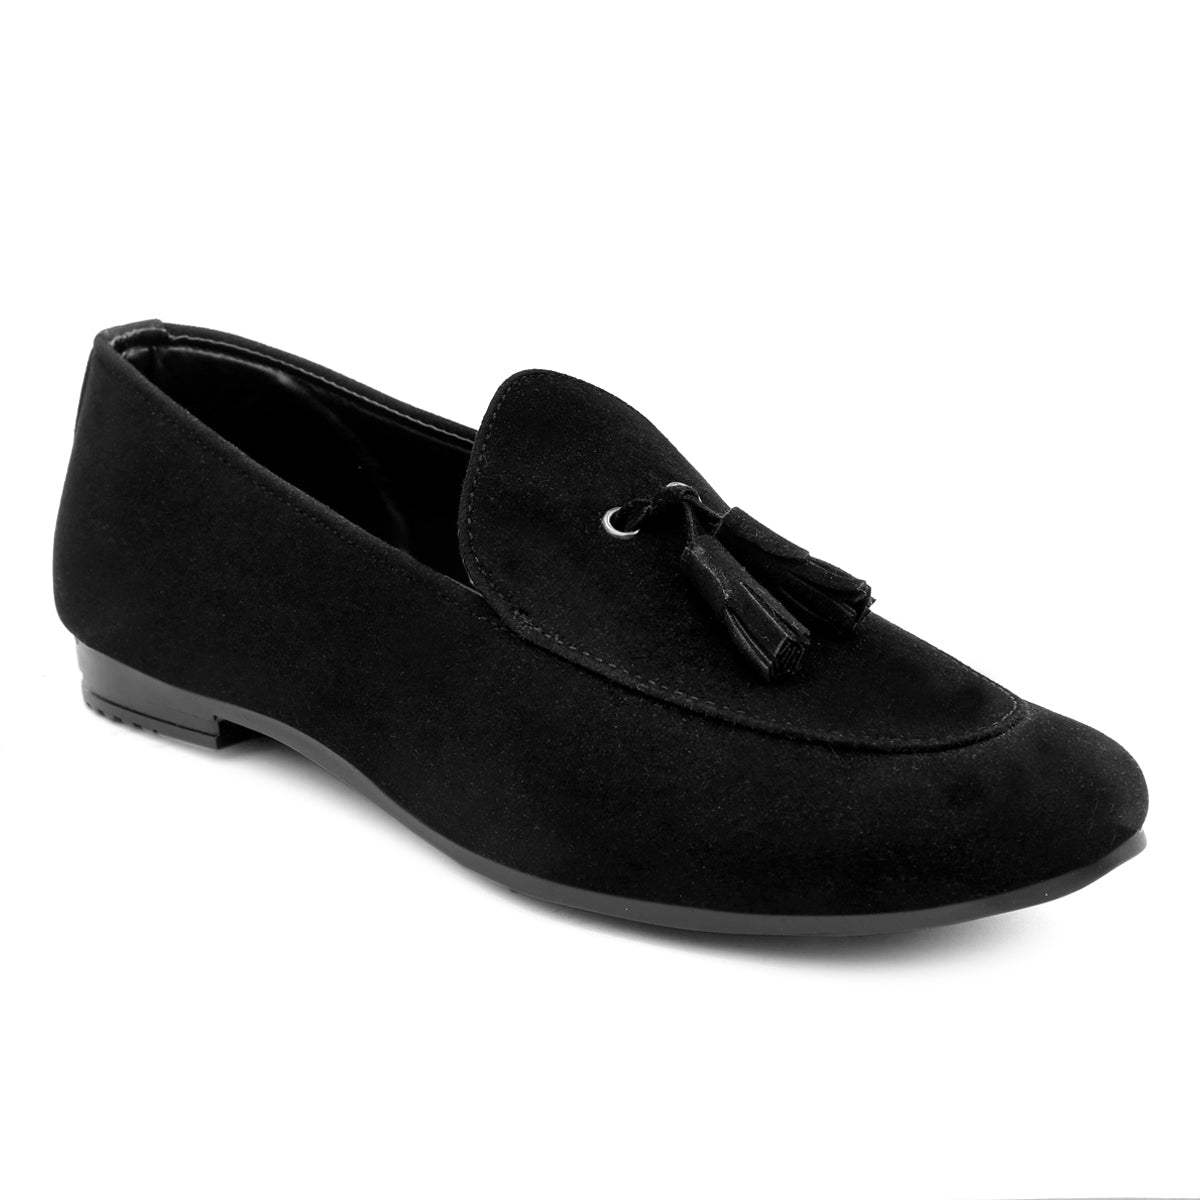 Designer Suede Moccasin Slip on Shoe For Men Party And Casual Wear -JackMarc - JACKMARC.COM